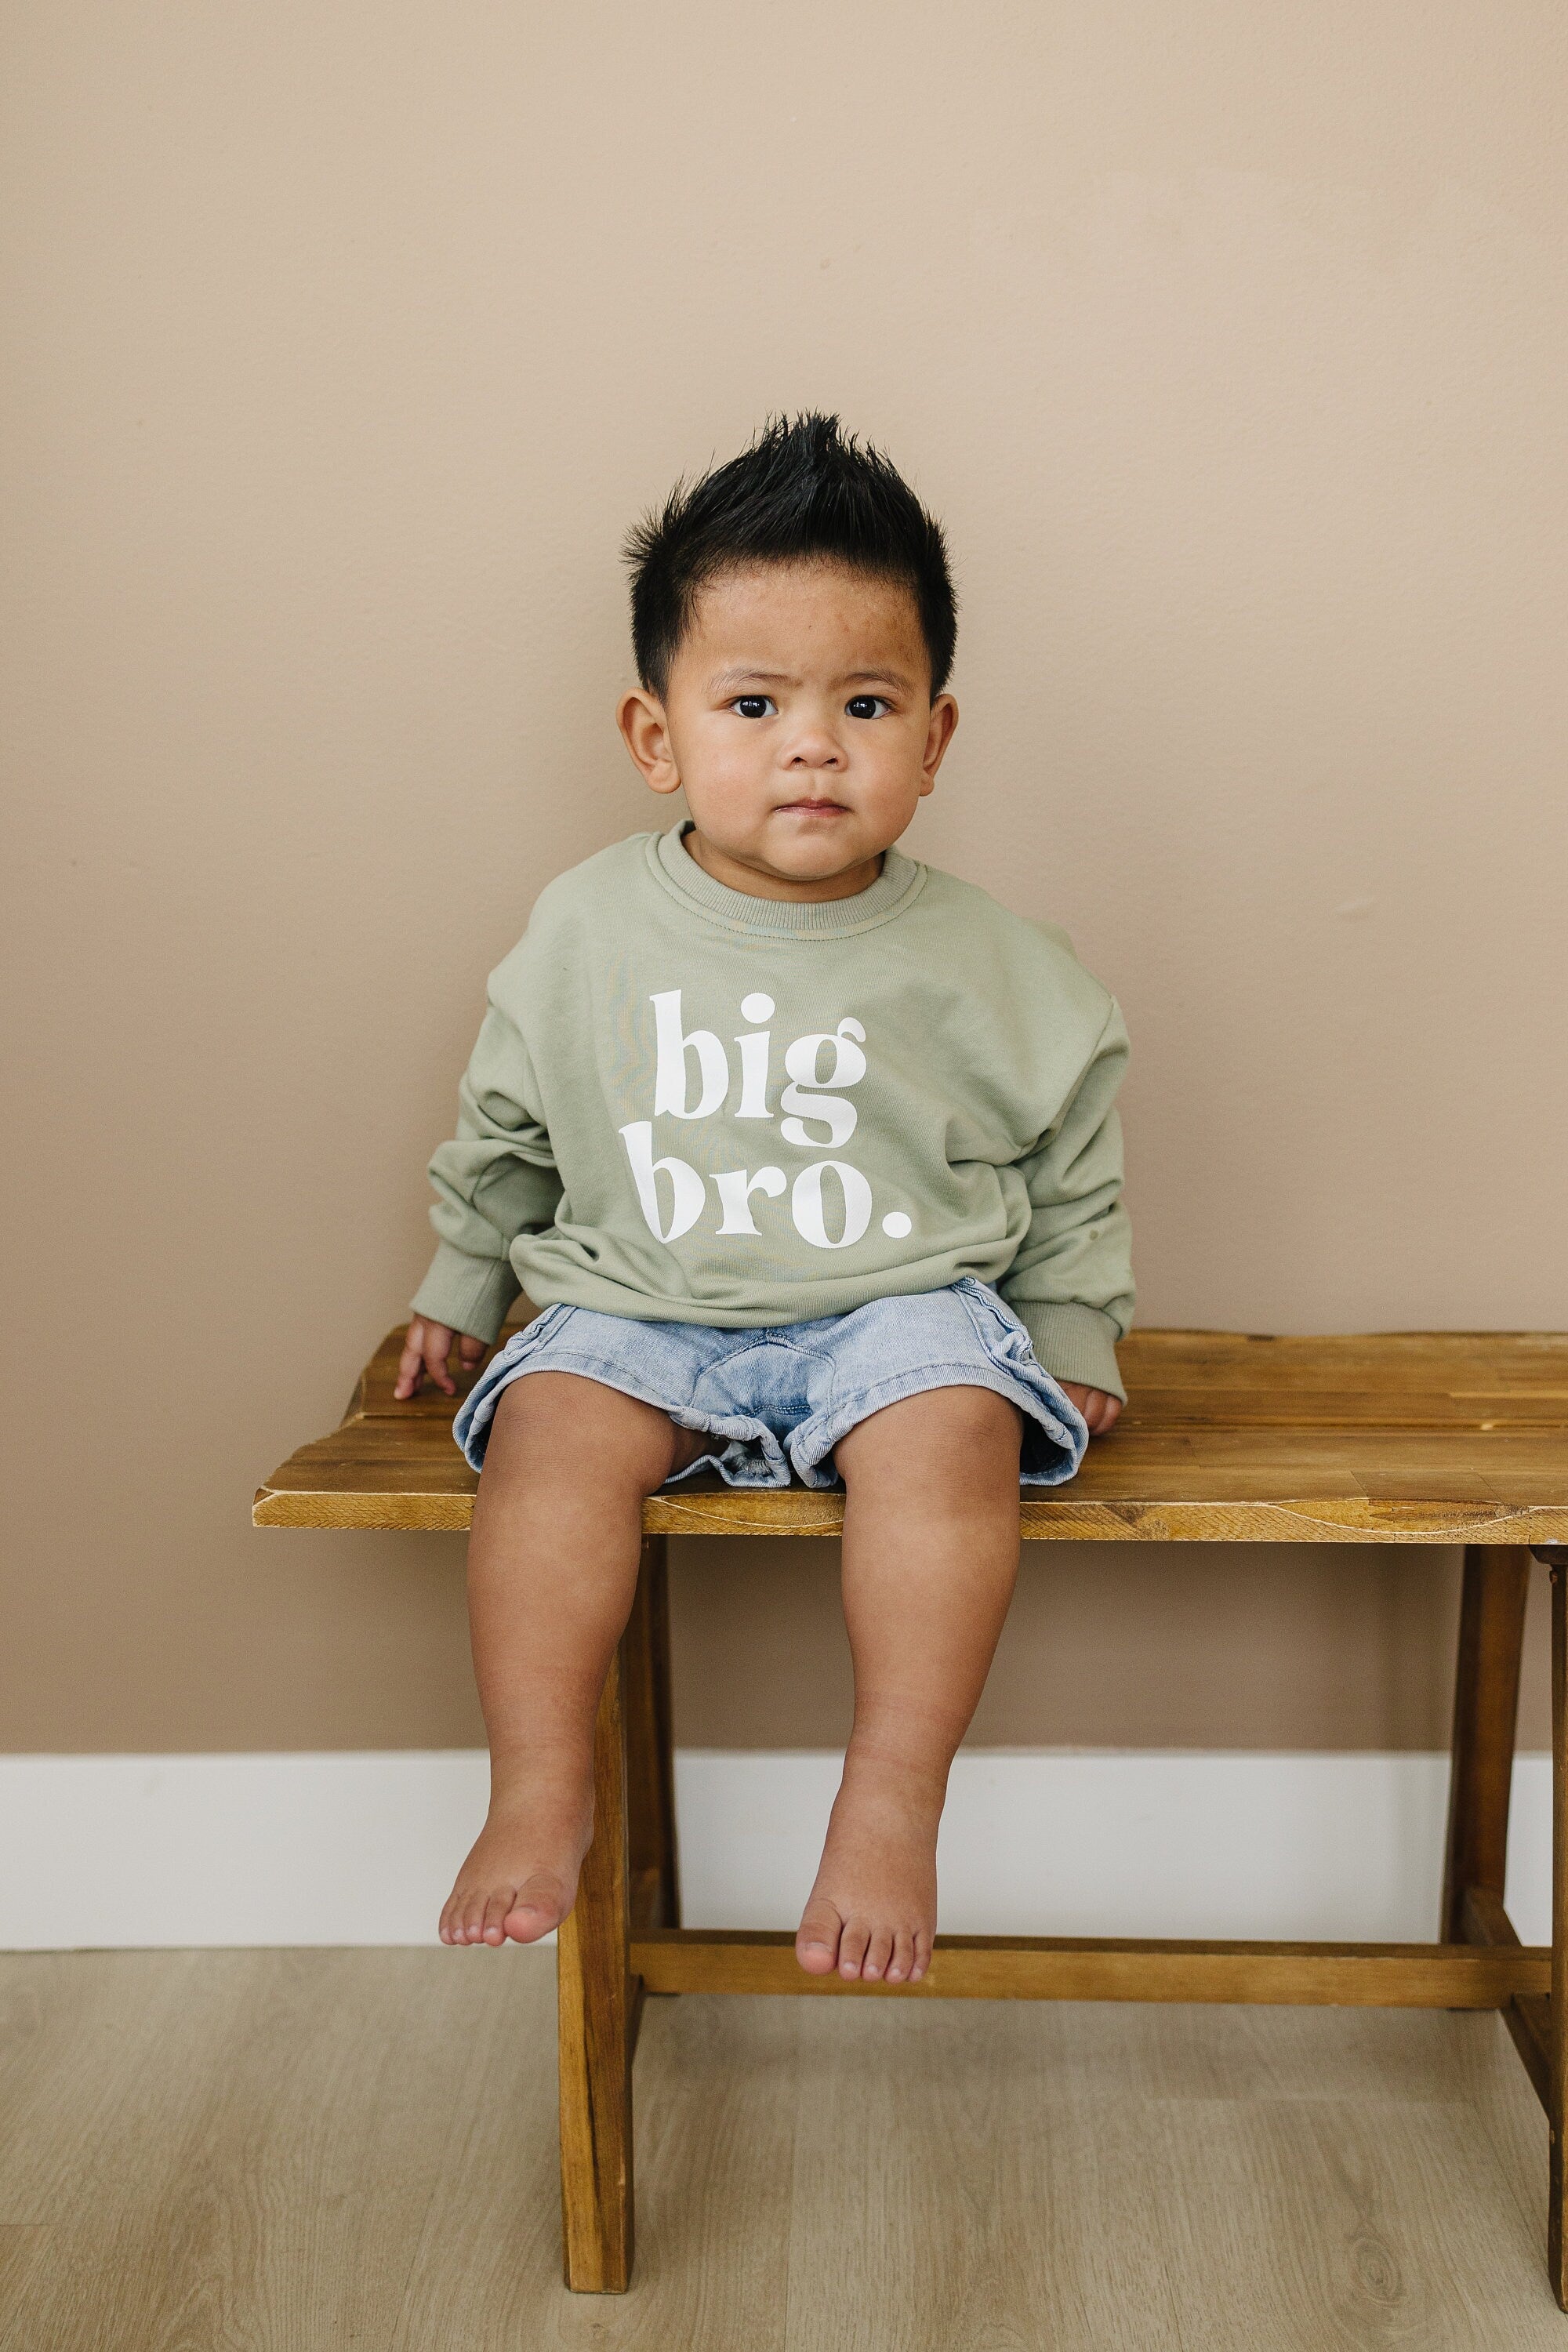 BIG BRO Graphic Crewneck Sweatshirt - Big Brother Sweatshirt - Baby Toddler Boy Clothes - Big Brother Sweatshirt Shirt Outfit Top Crew Neck